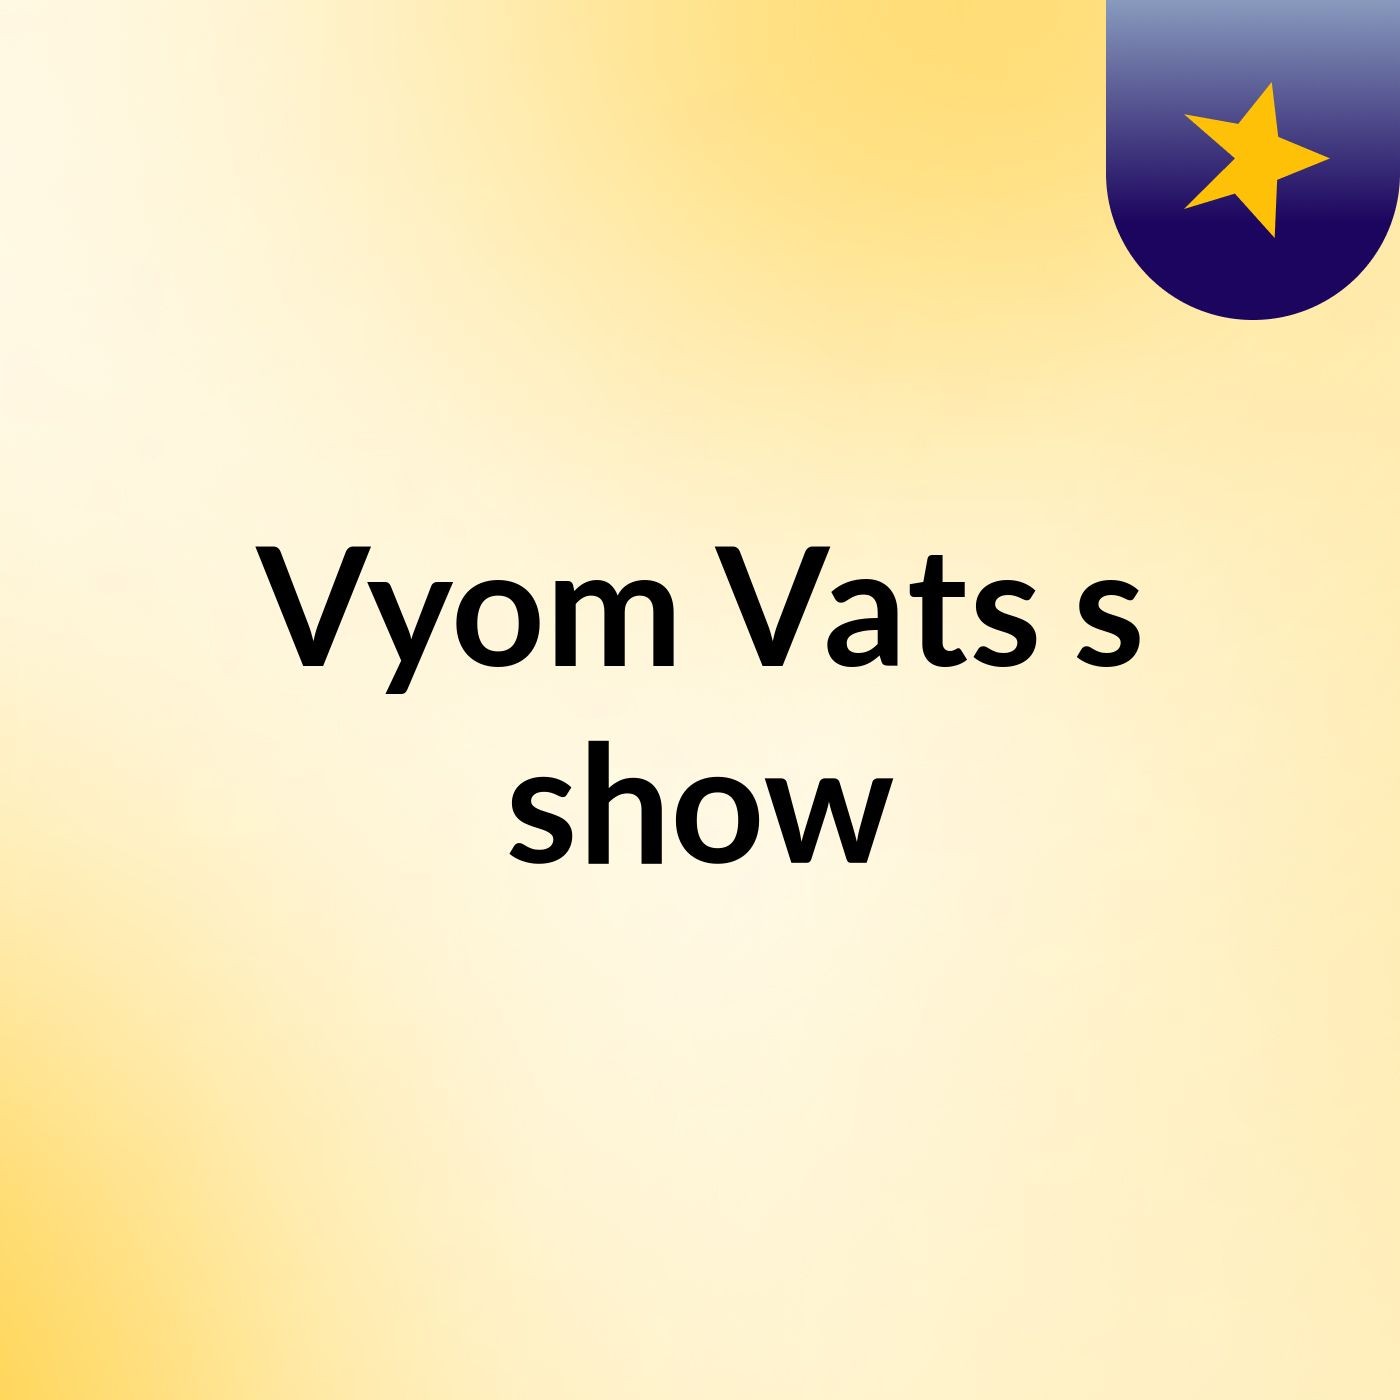 Vyom Vats's show